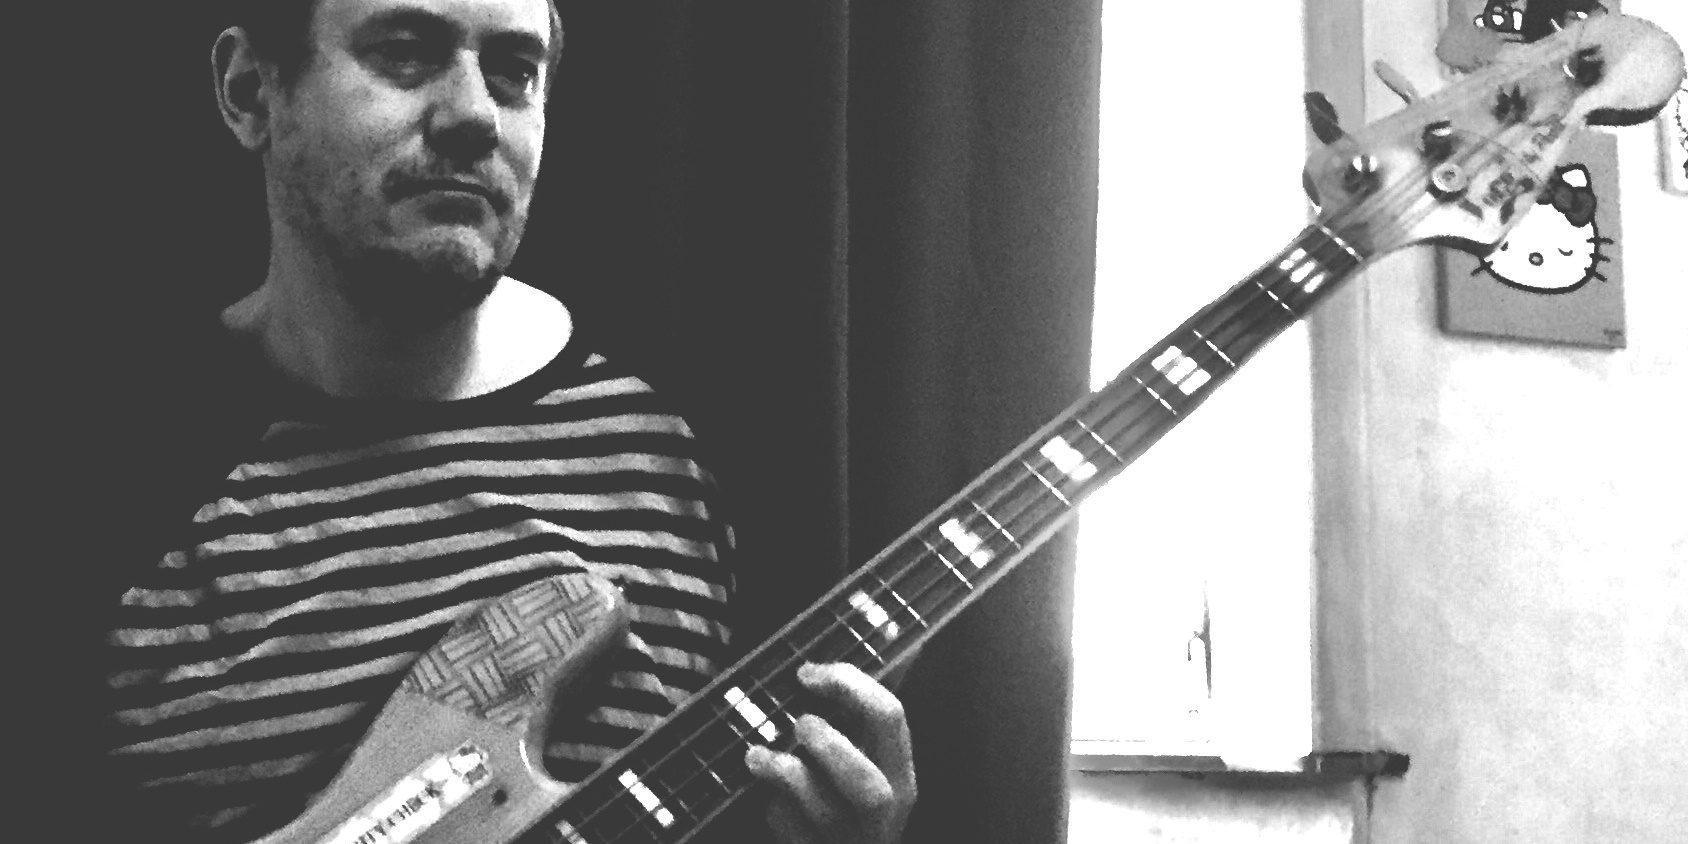 Belgian artist Gilles Snowcat practices bass guitar during the COVID19 Lockdown